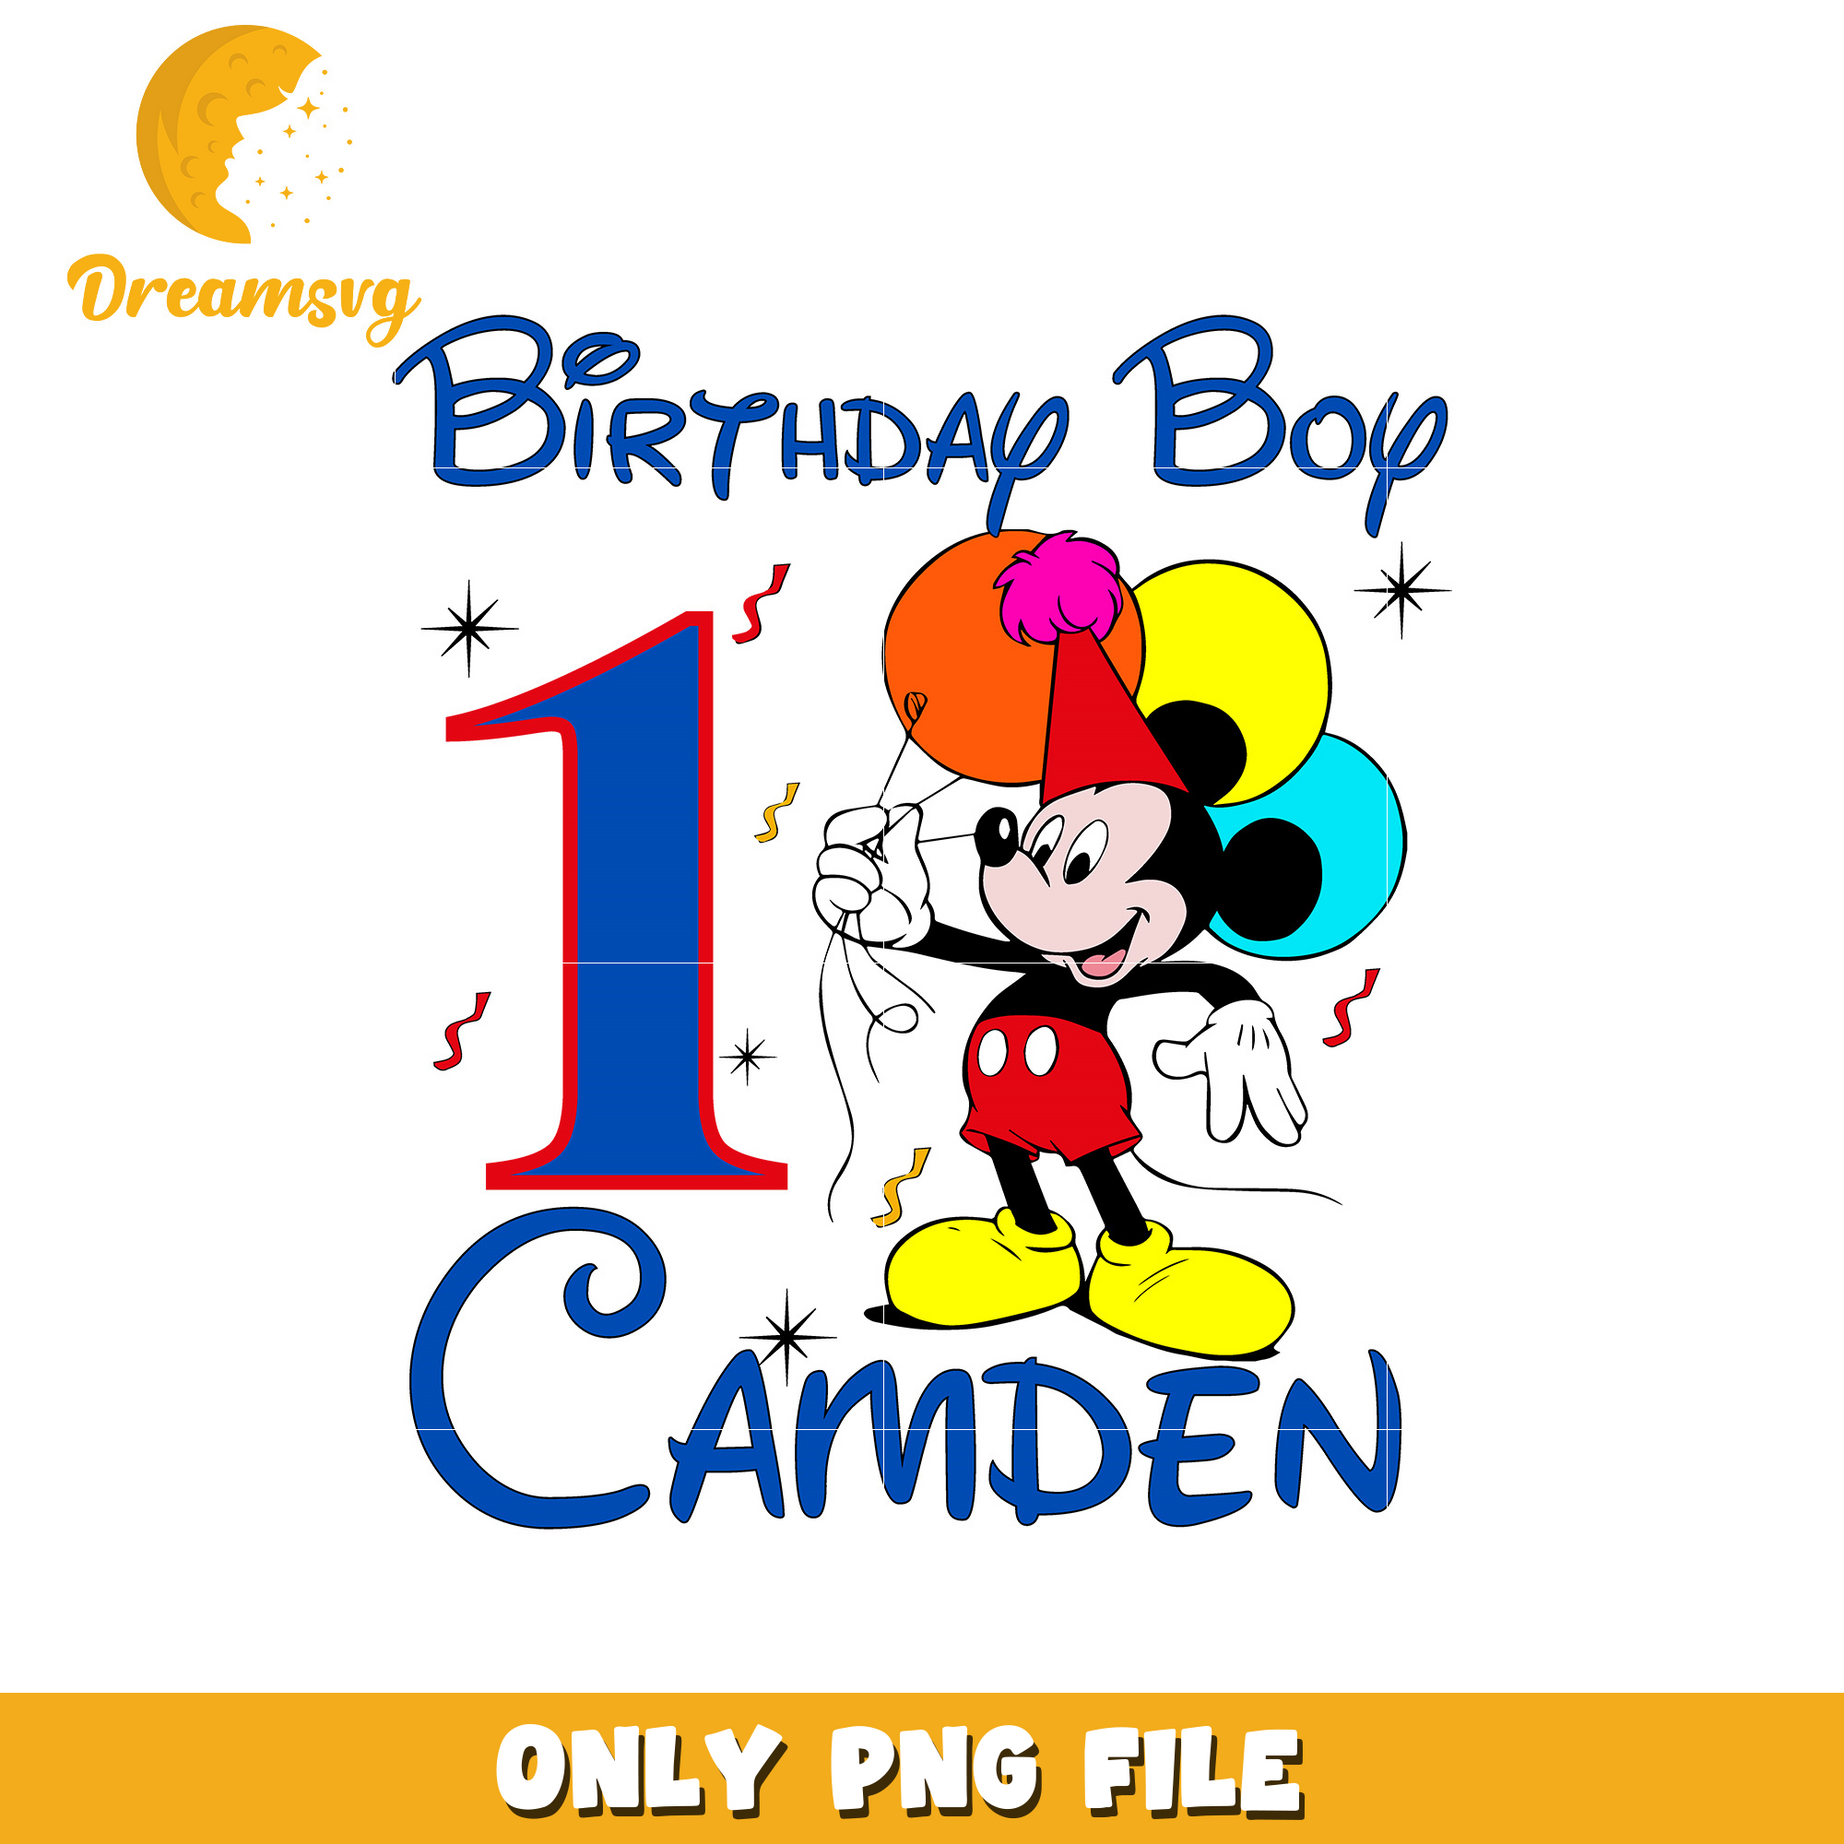 Mickey mouse birthday boy camden png